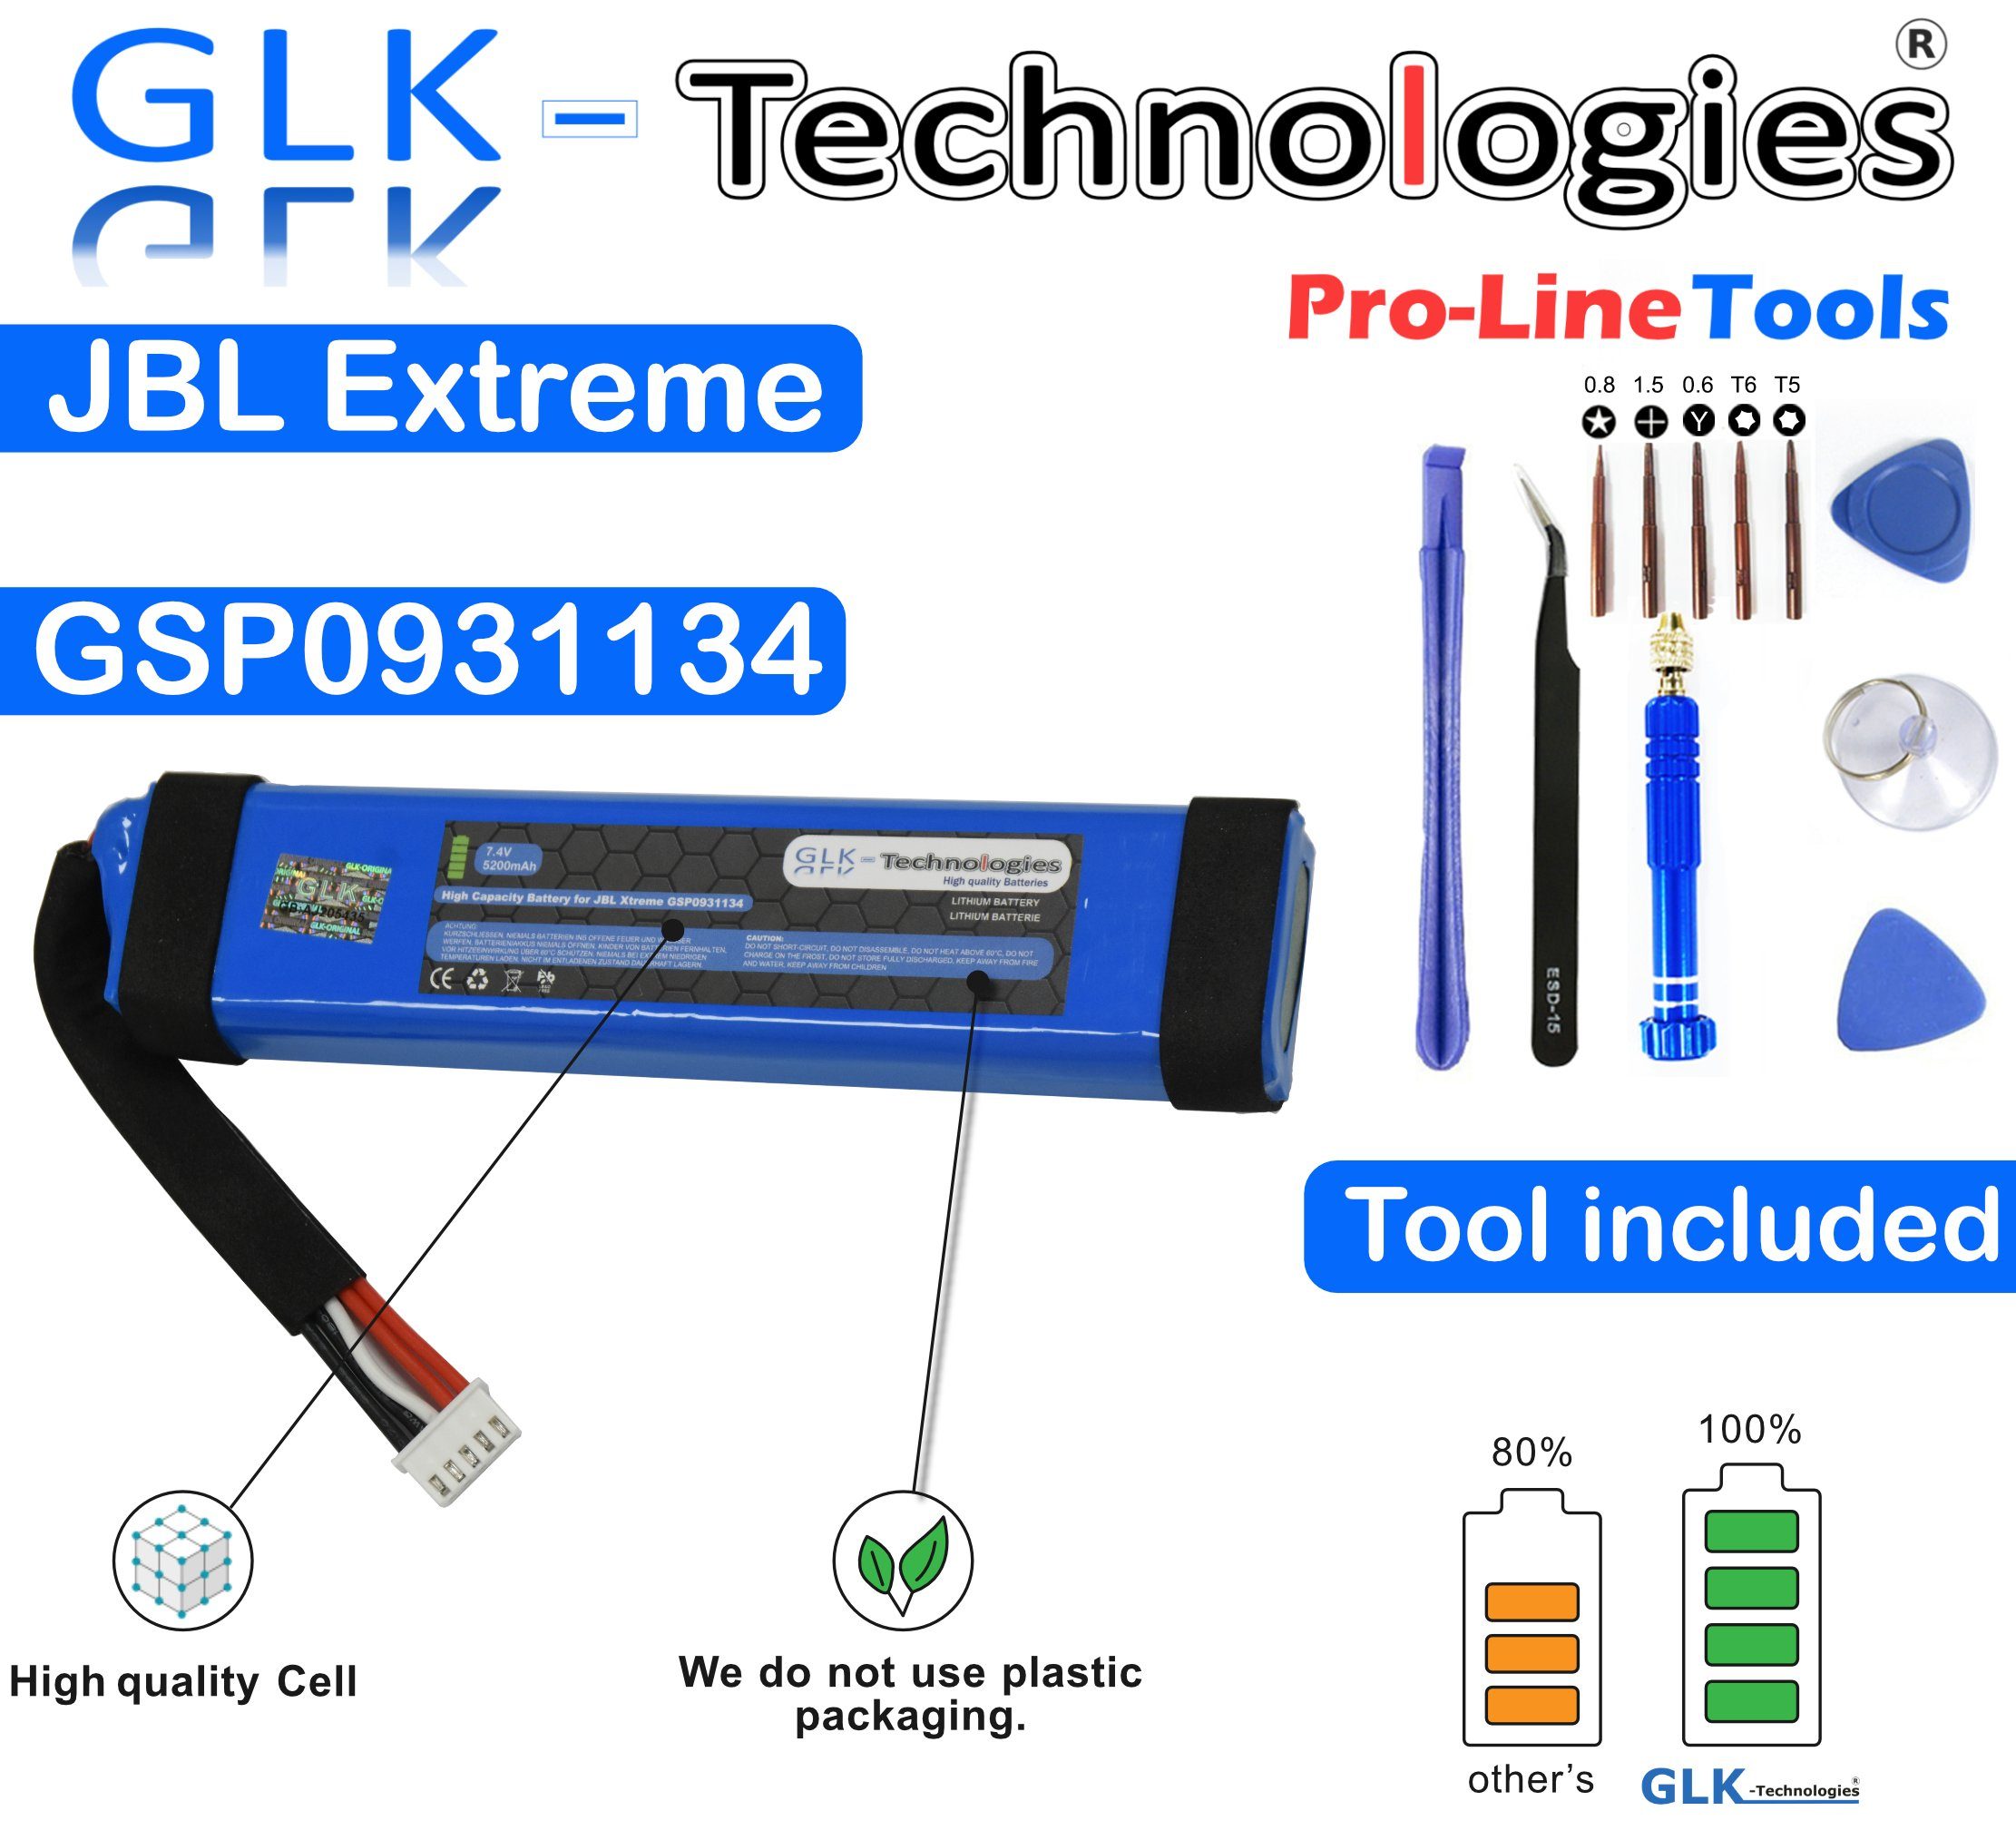 GLK-Technologies GLK Akku Battery Bluetooth GSP0931134 1 JBL Lautsprecher für Extreme Akku